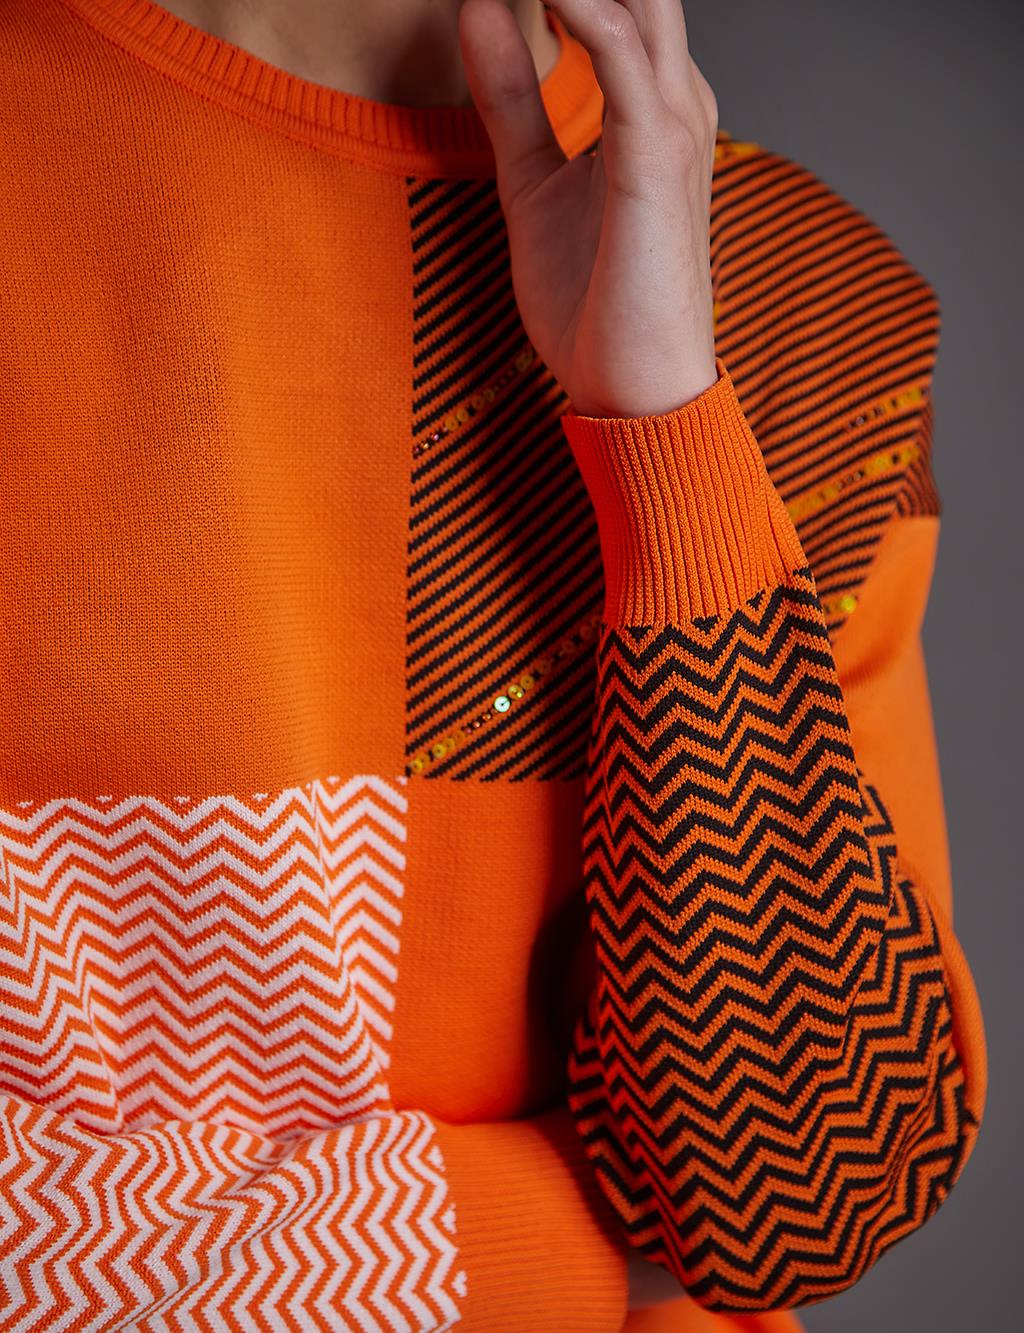 Abstract Pattern Crew Neck Knitwear Tunic Orange